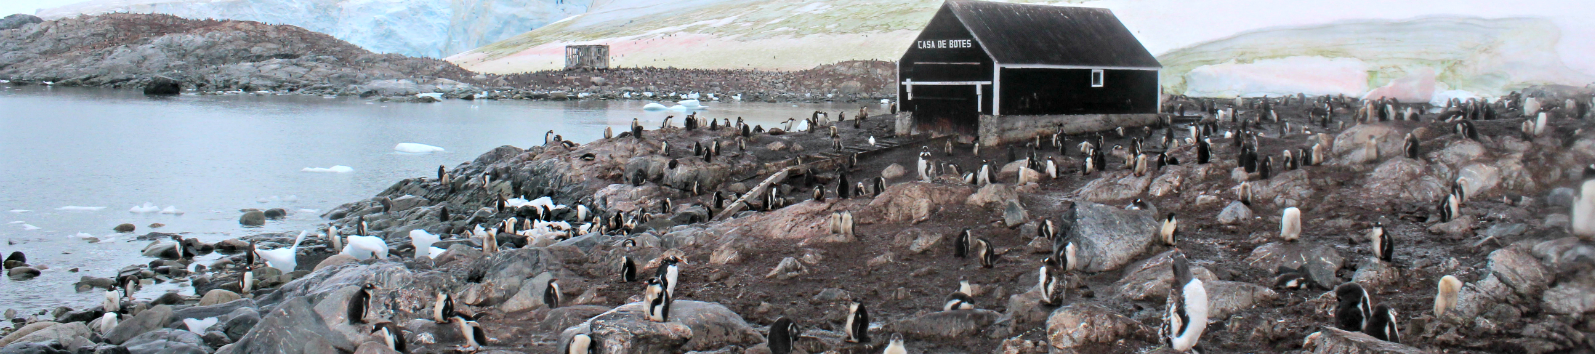 Gentoo Penguins at Chilean Station